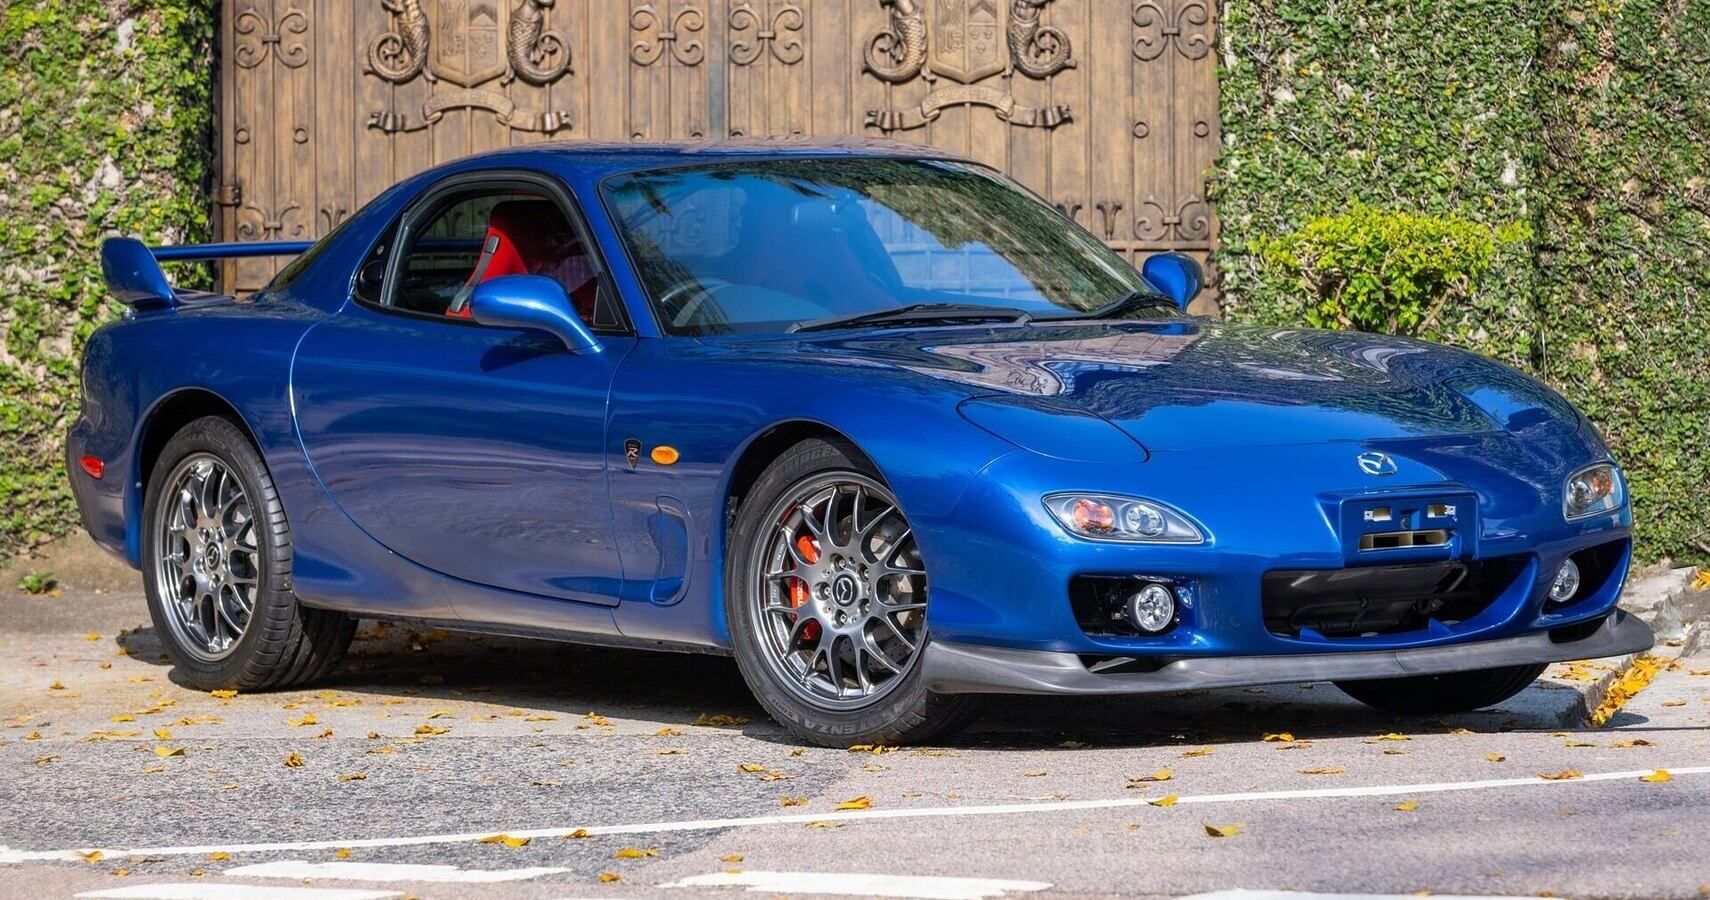 A blue 2002 Mazda RX-7 Spirit-R Type A parked